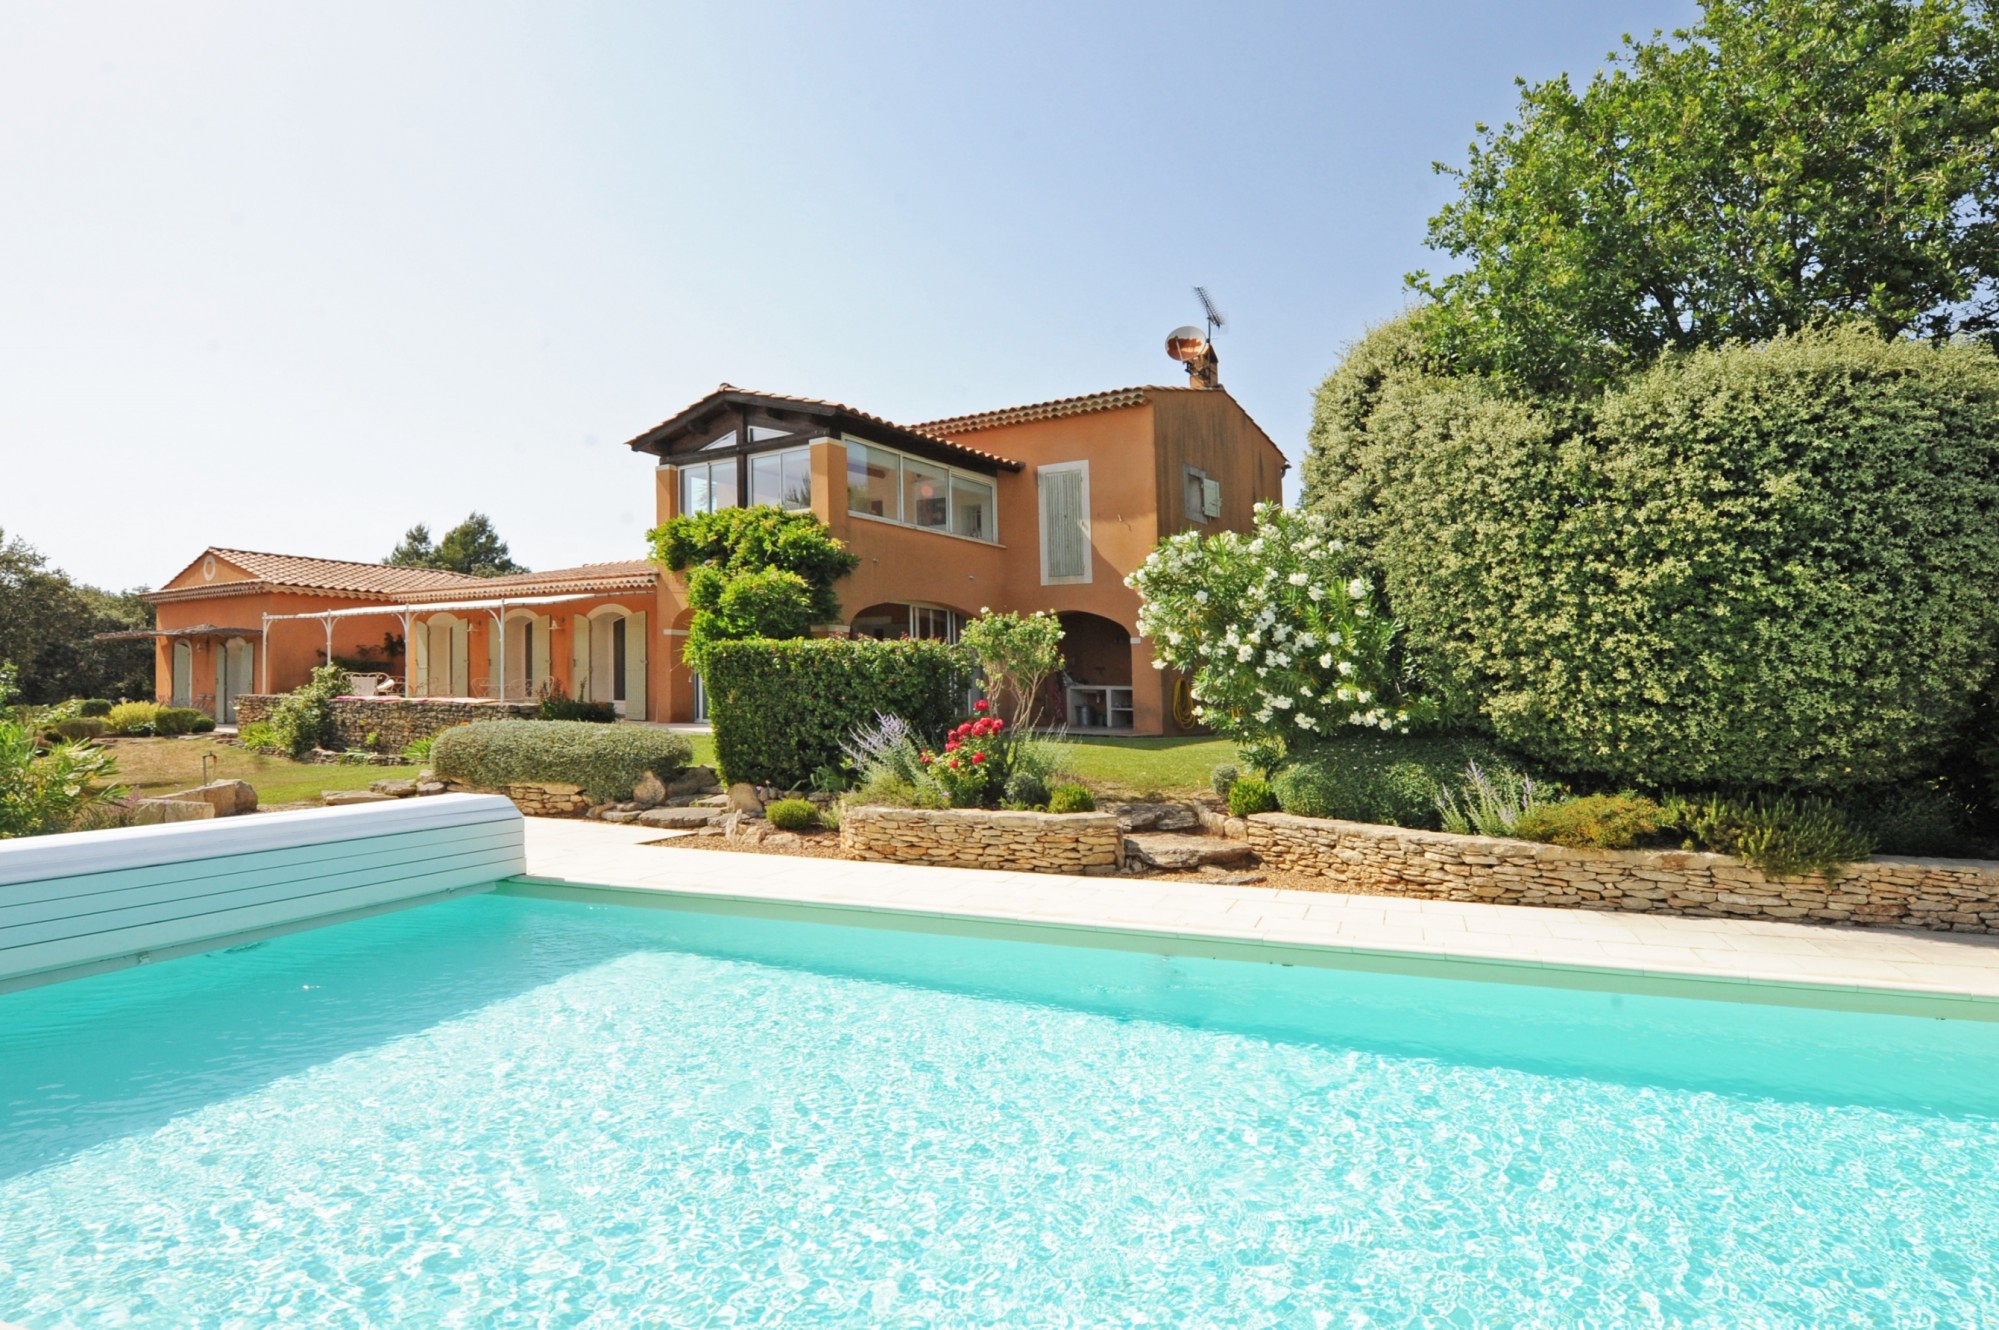 Vente Cabrières d'Avignon : grande villa contemporaine avec piscine.